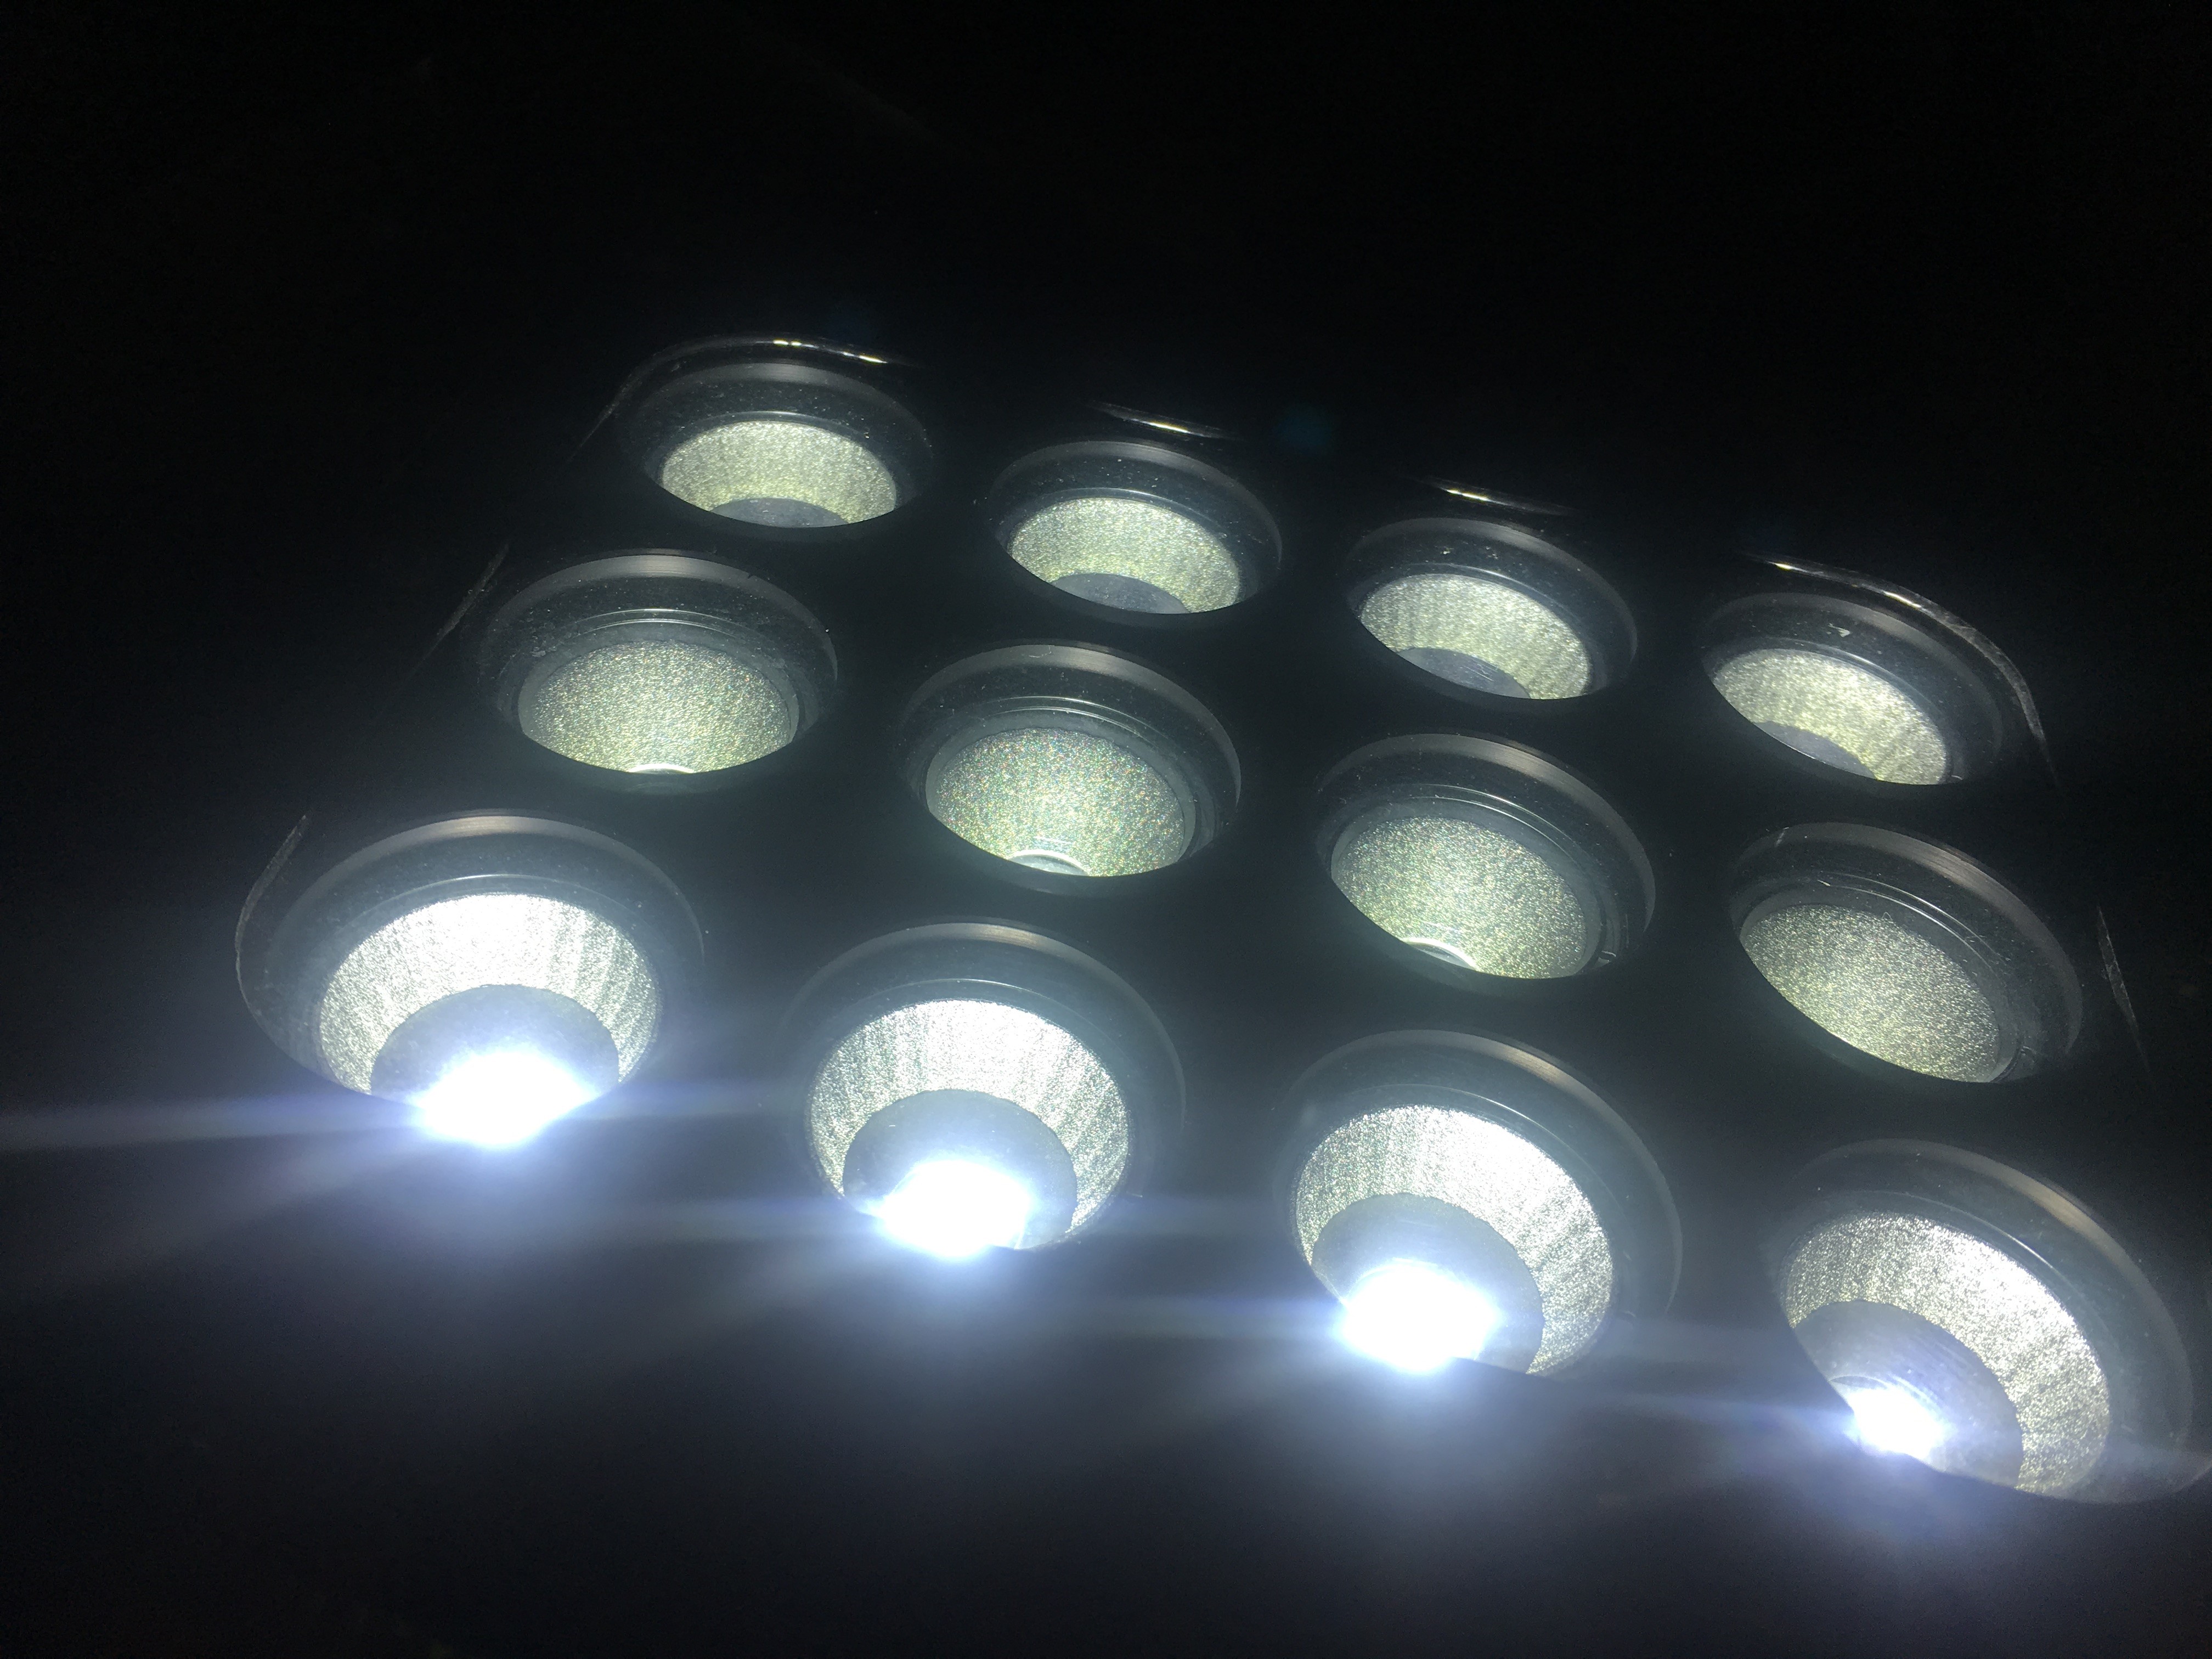 Lumens, lux, kelvin: watt are they? for Lighting Towers